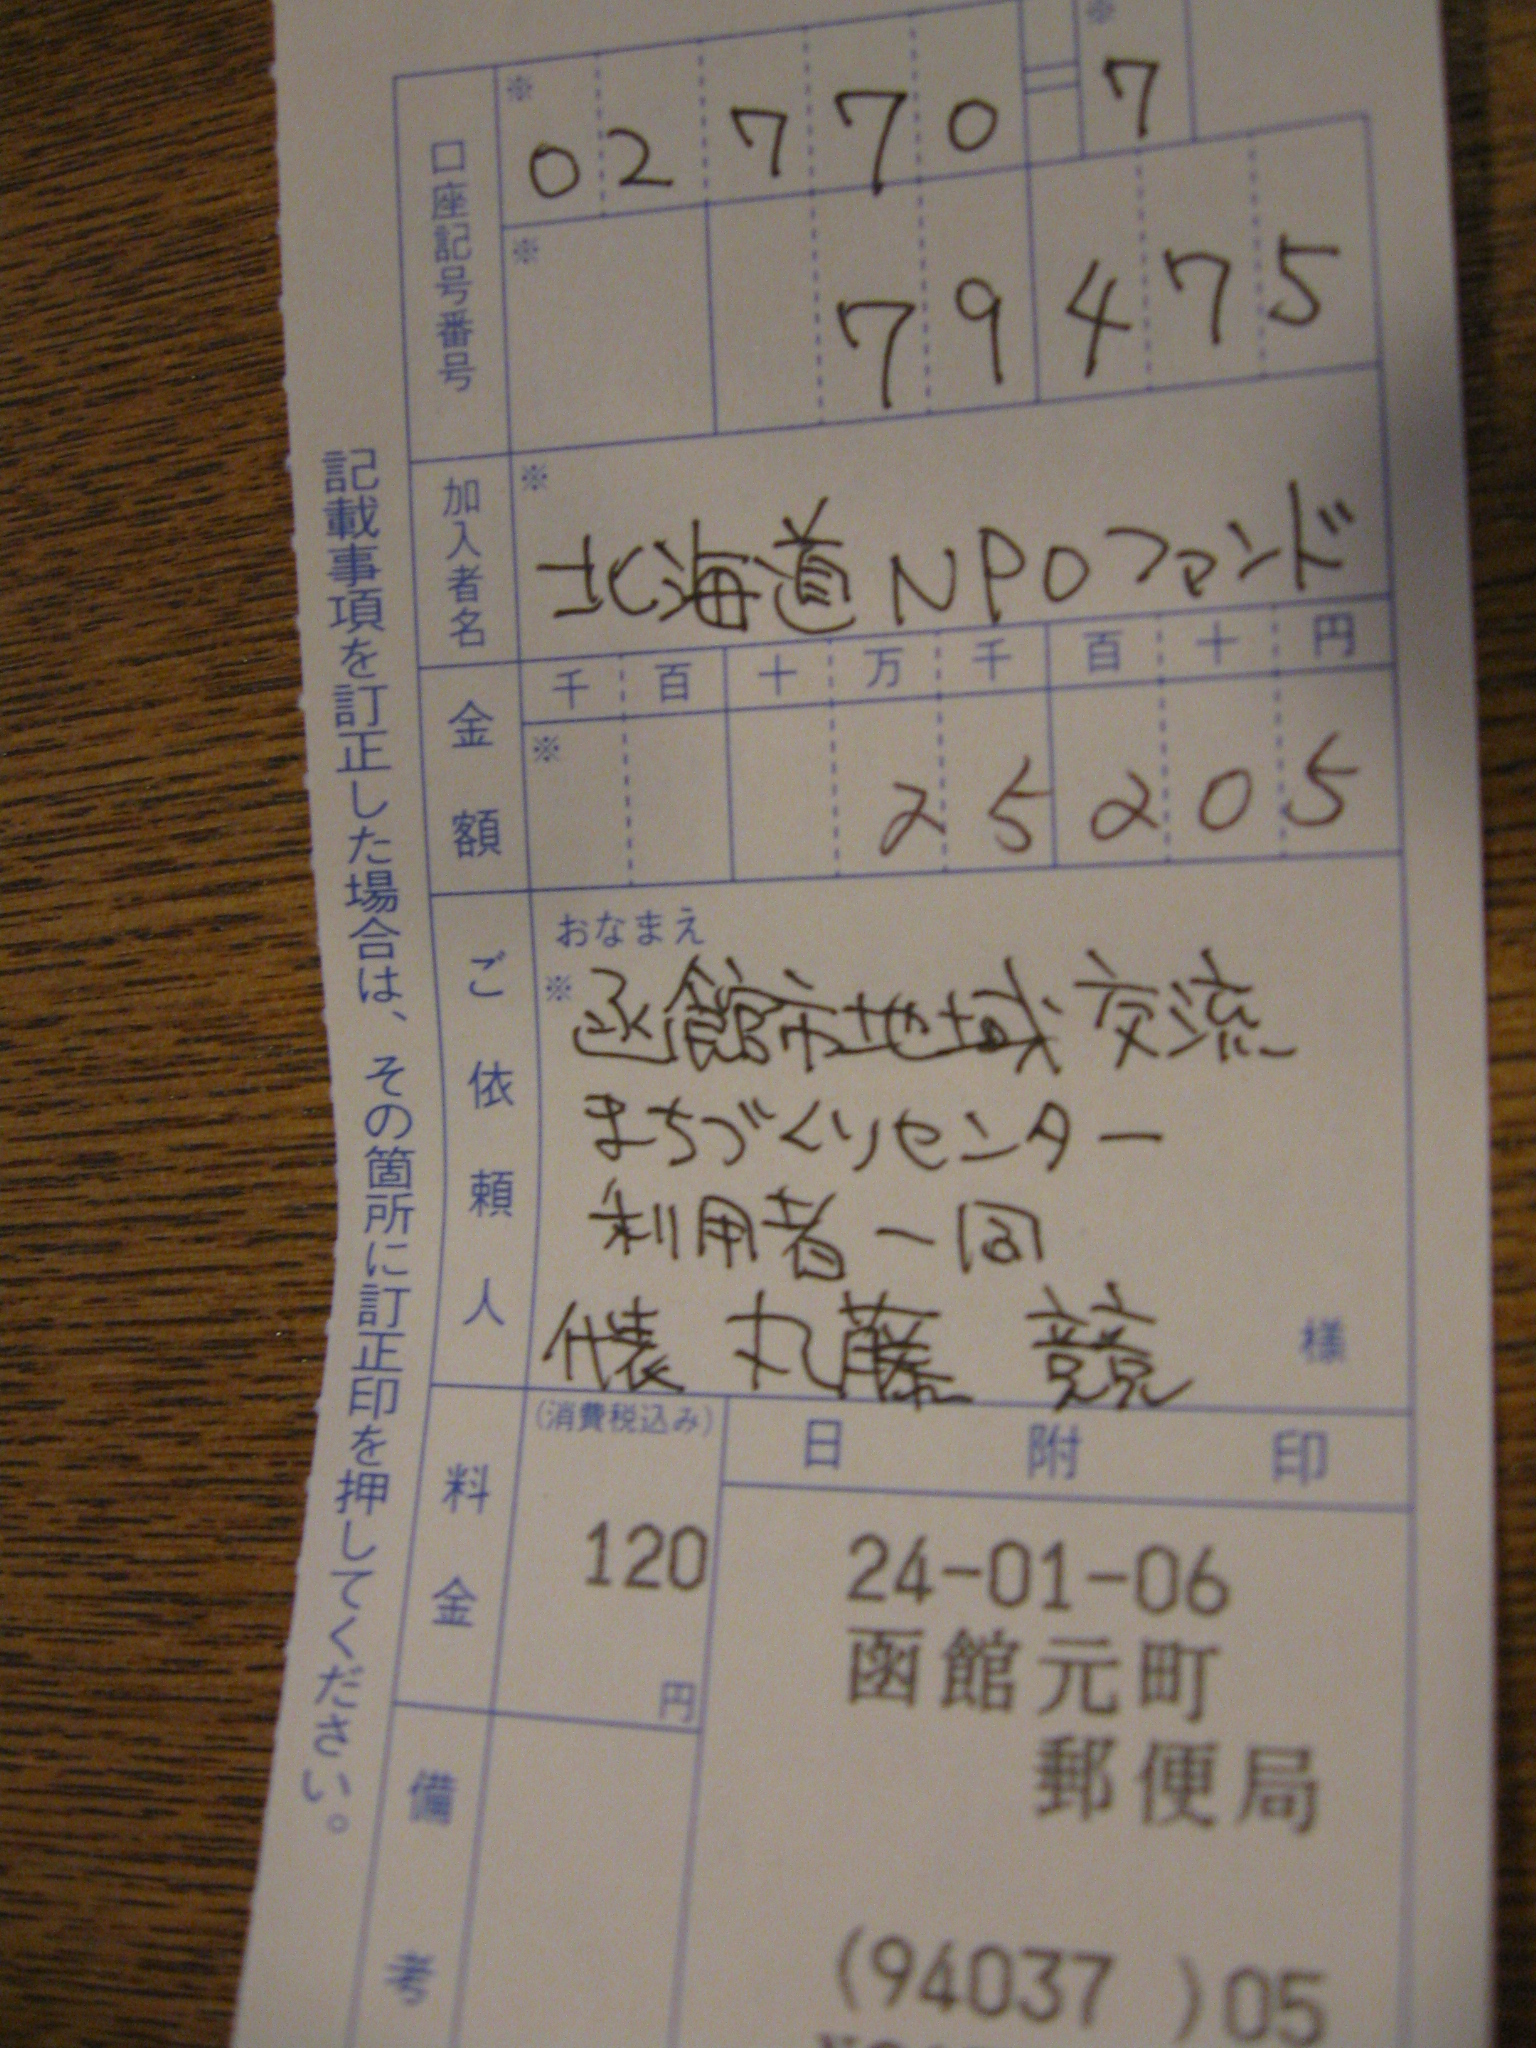 http://www.hakomachi.com/diary/images/IMG_4976.JPG